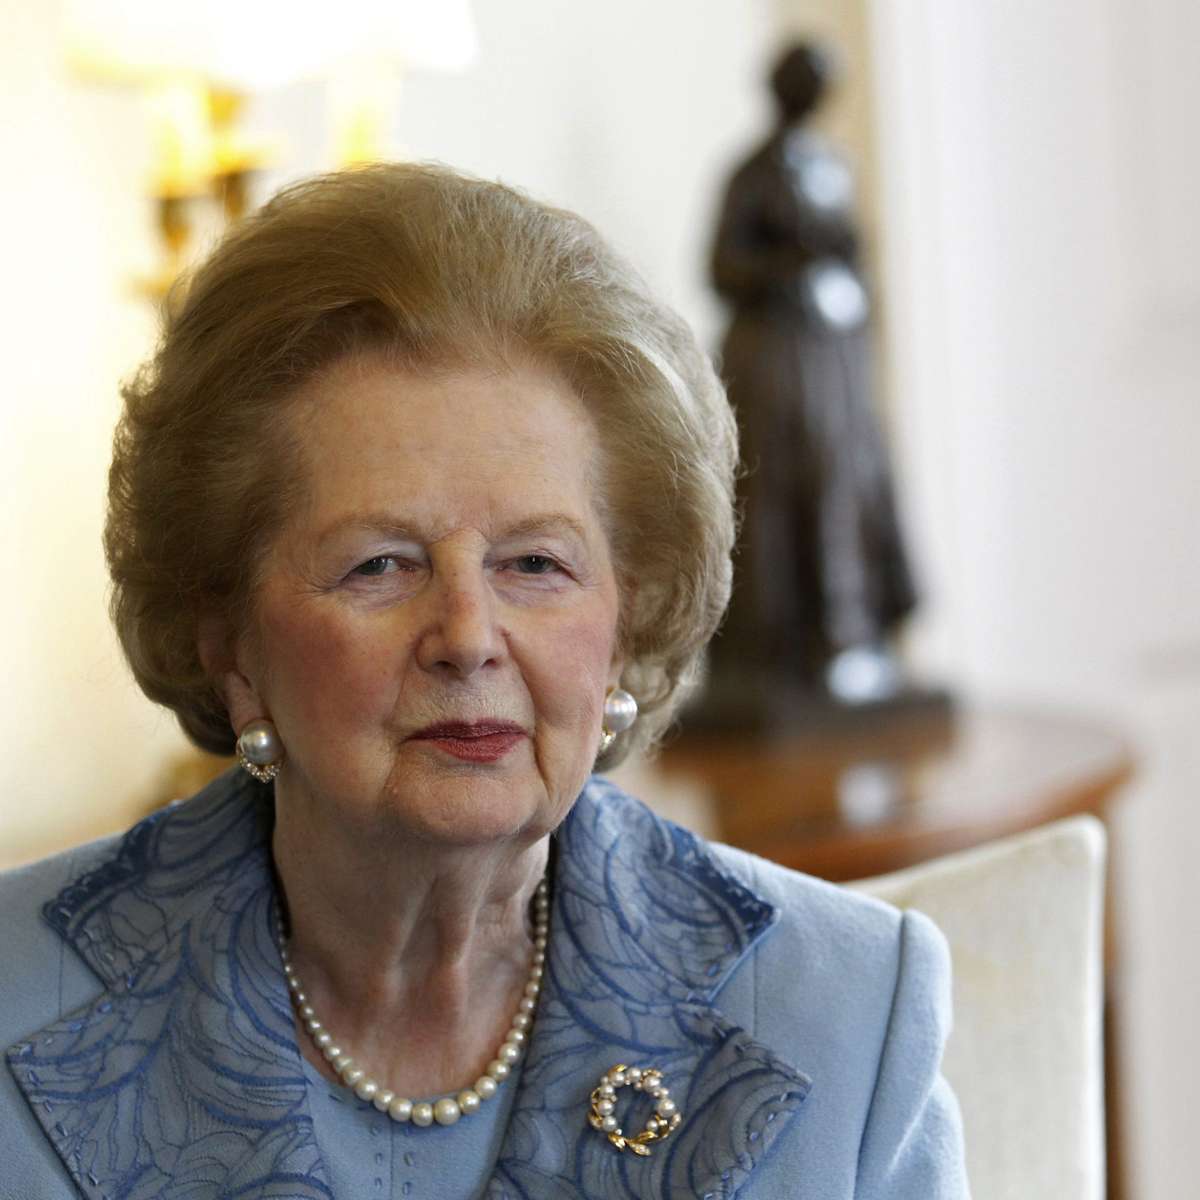 Morre Margaret Thatcher, a 'dama de ferro' - Brasil 247